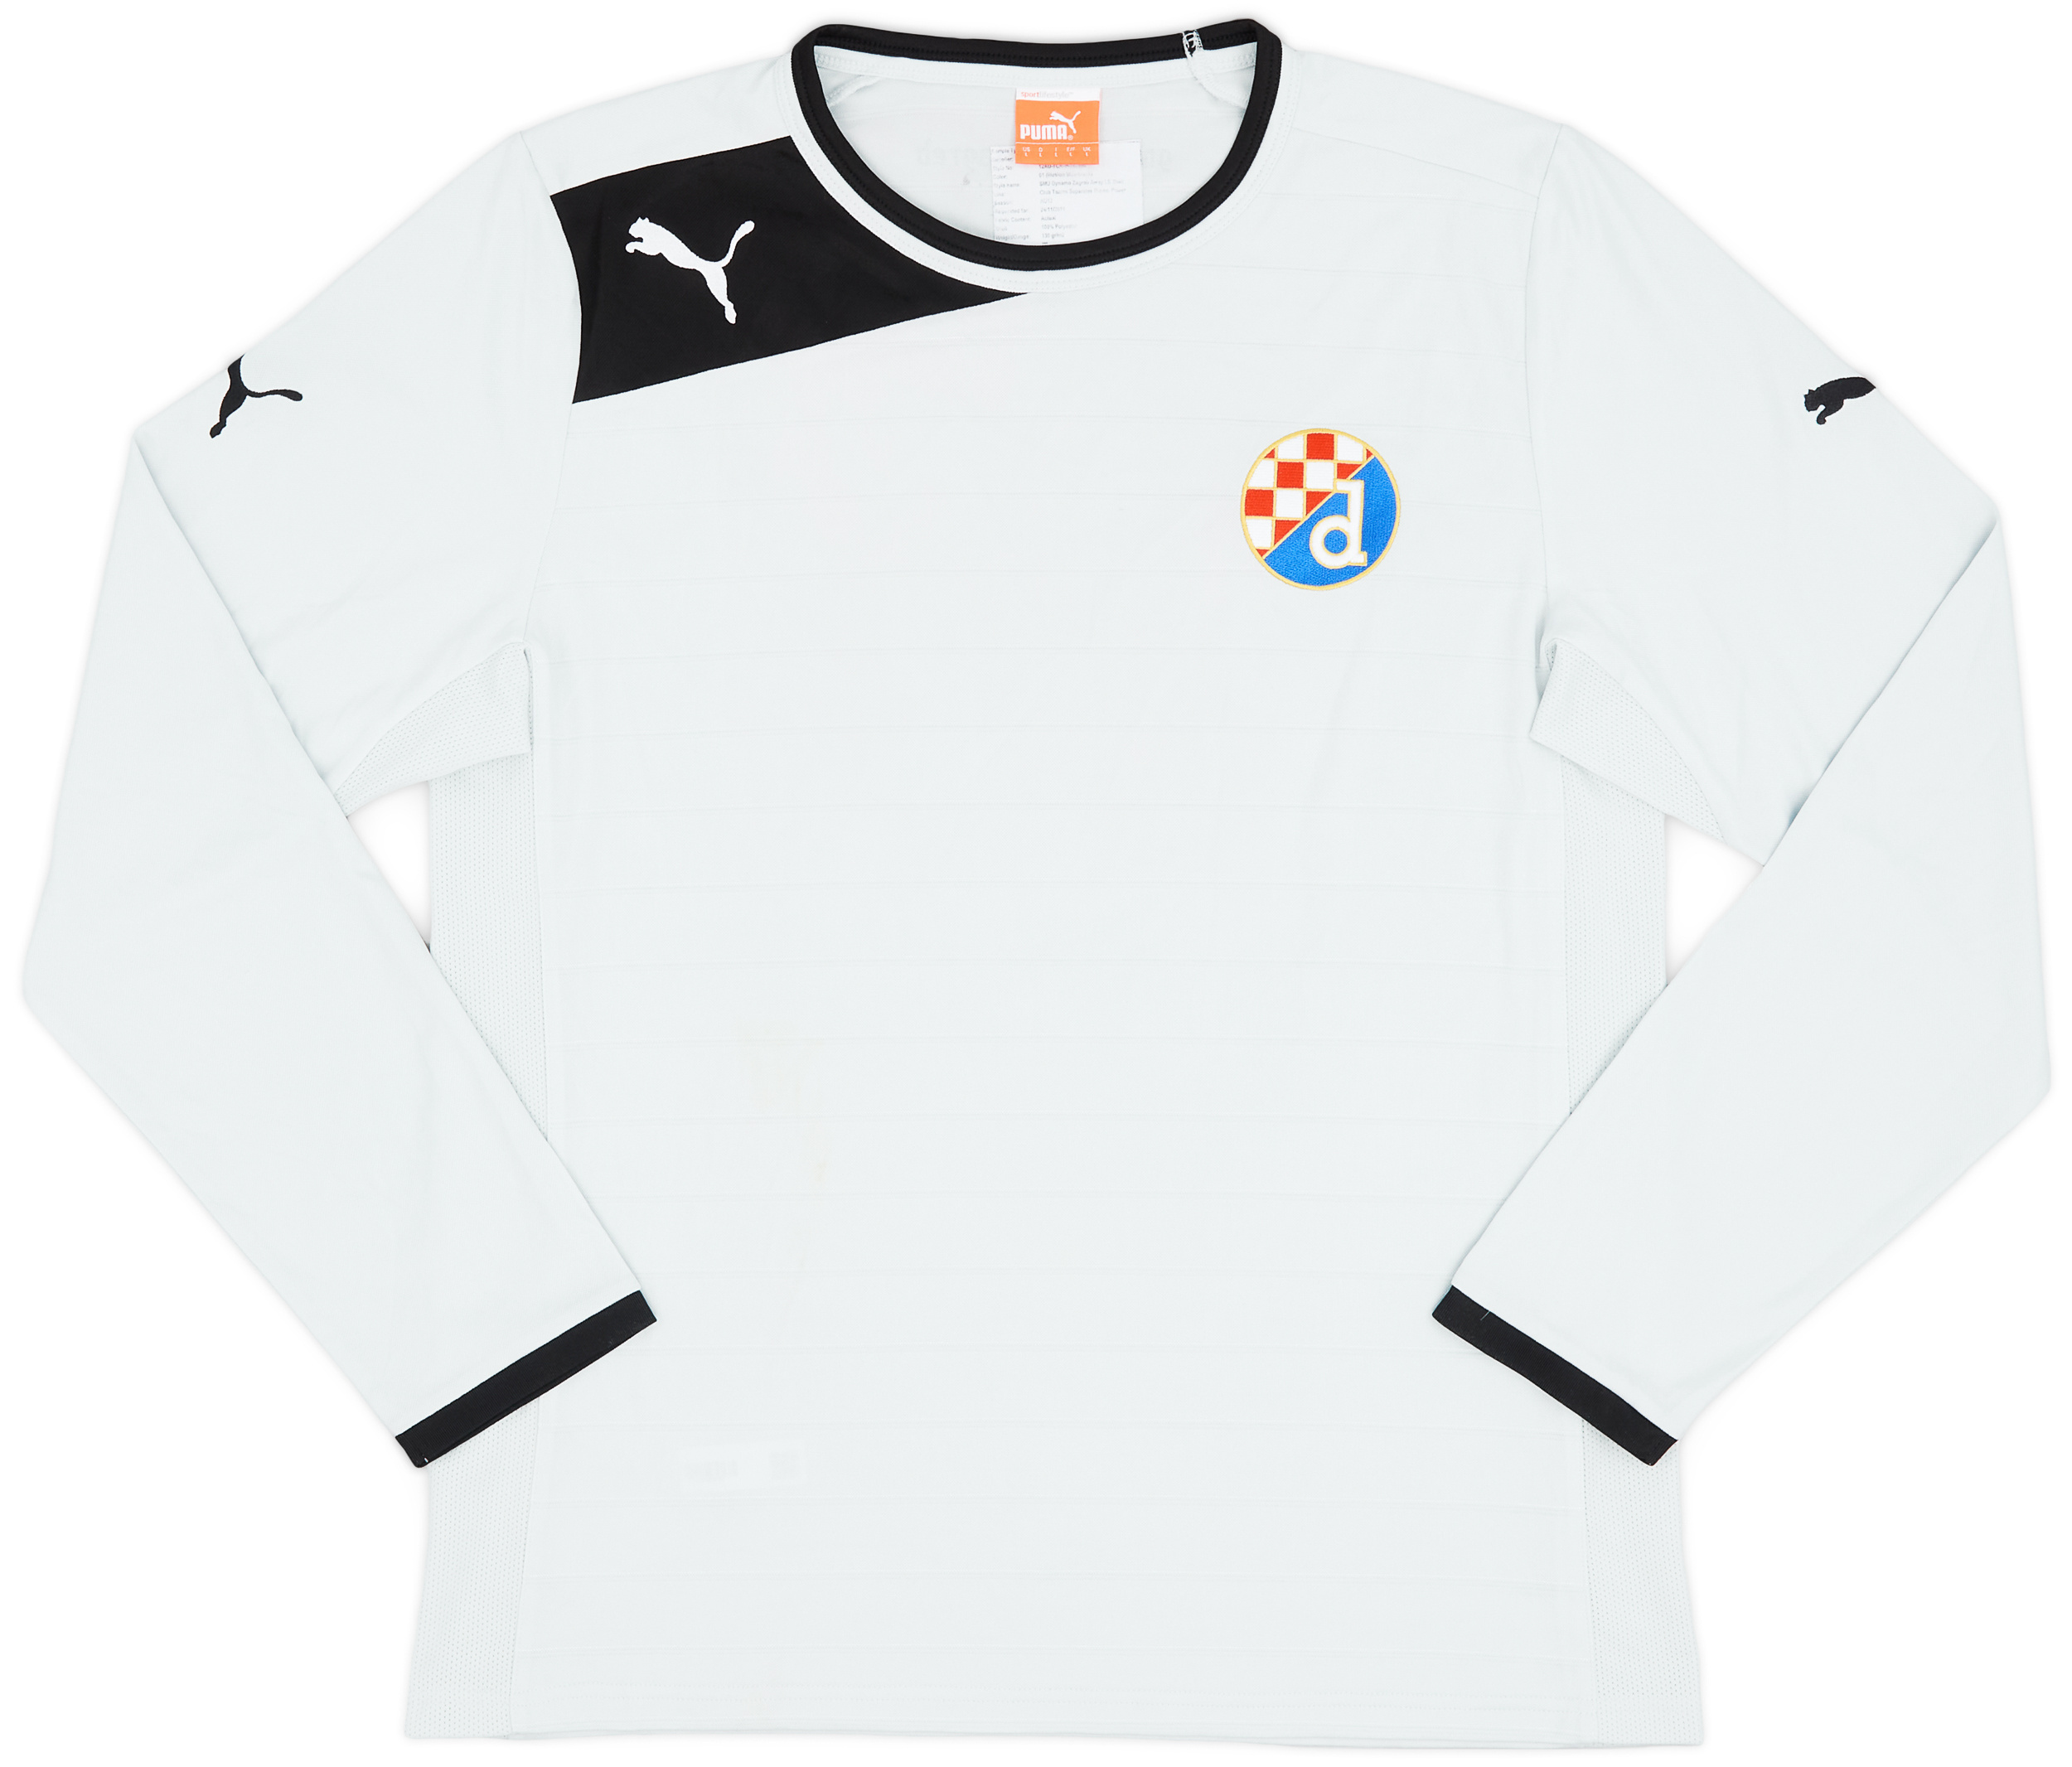 Dinamo Zagreb  Away shirt (Original)